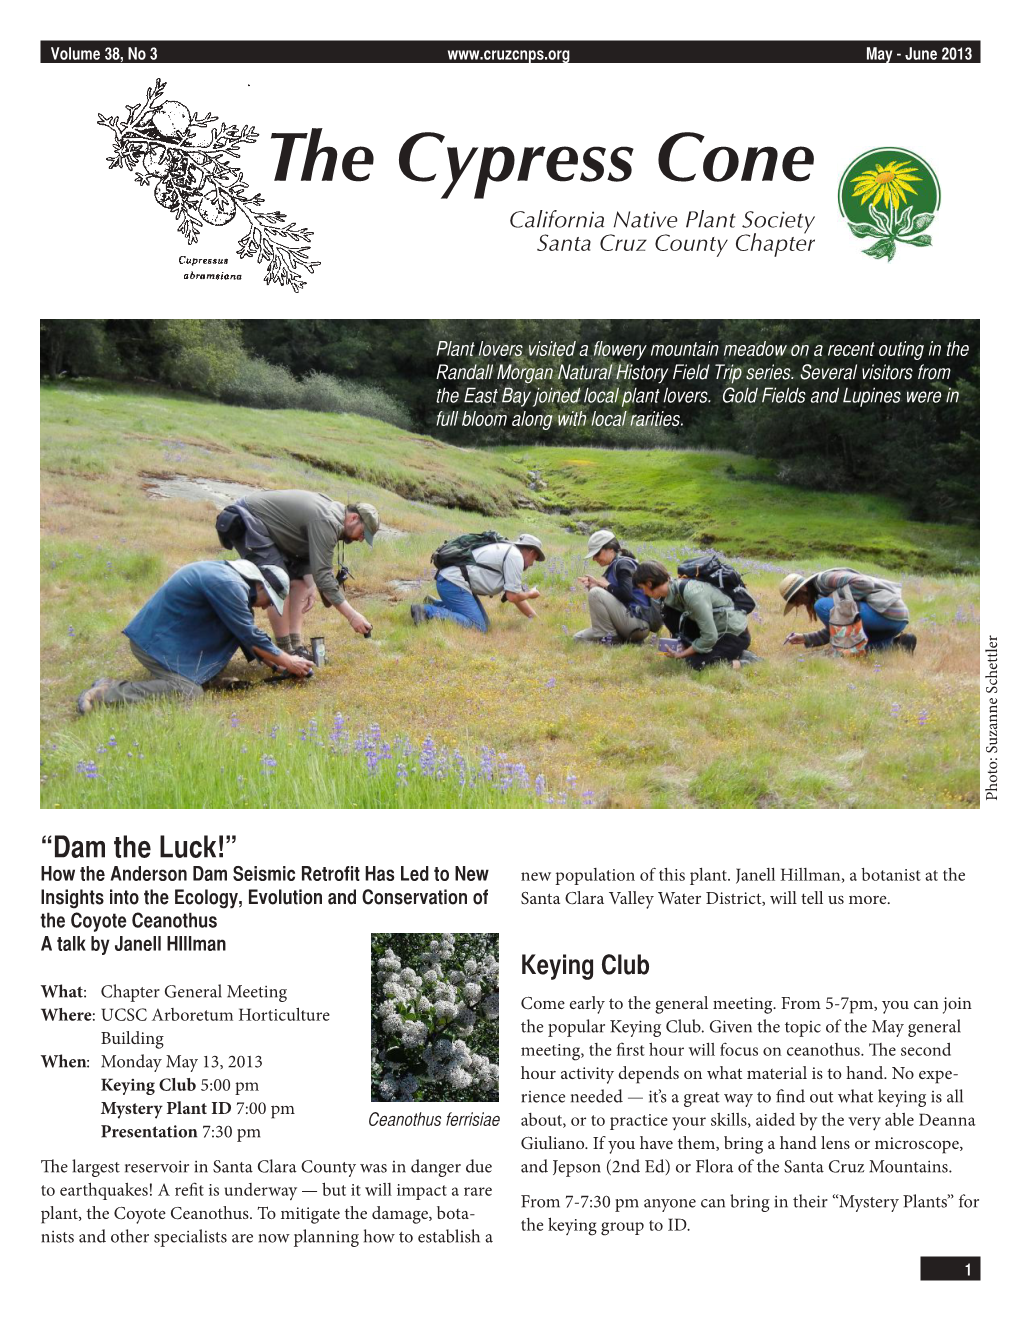 The Cypress Cone California Native Plant Society Santa Cruz County Chapter